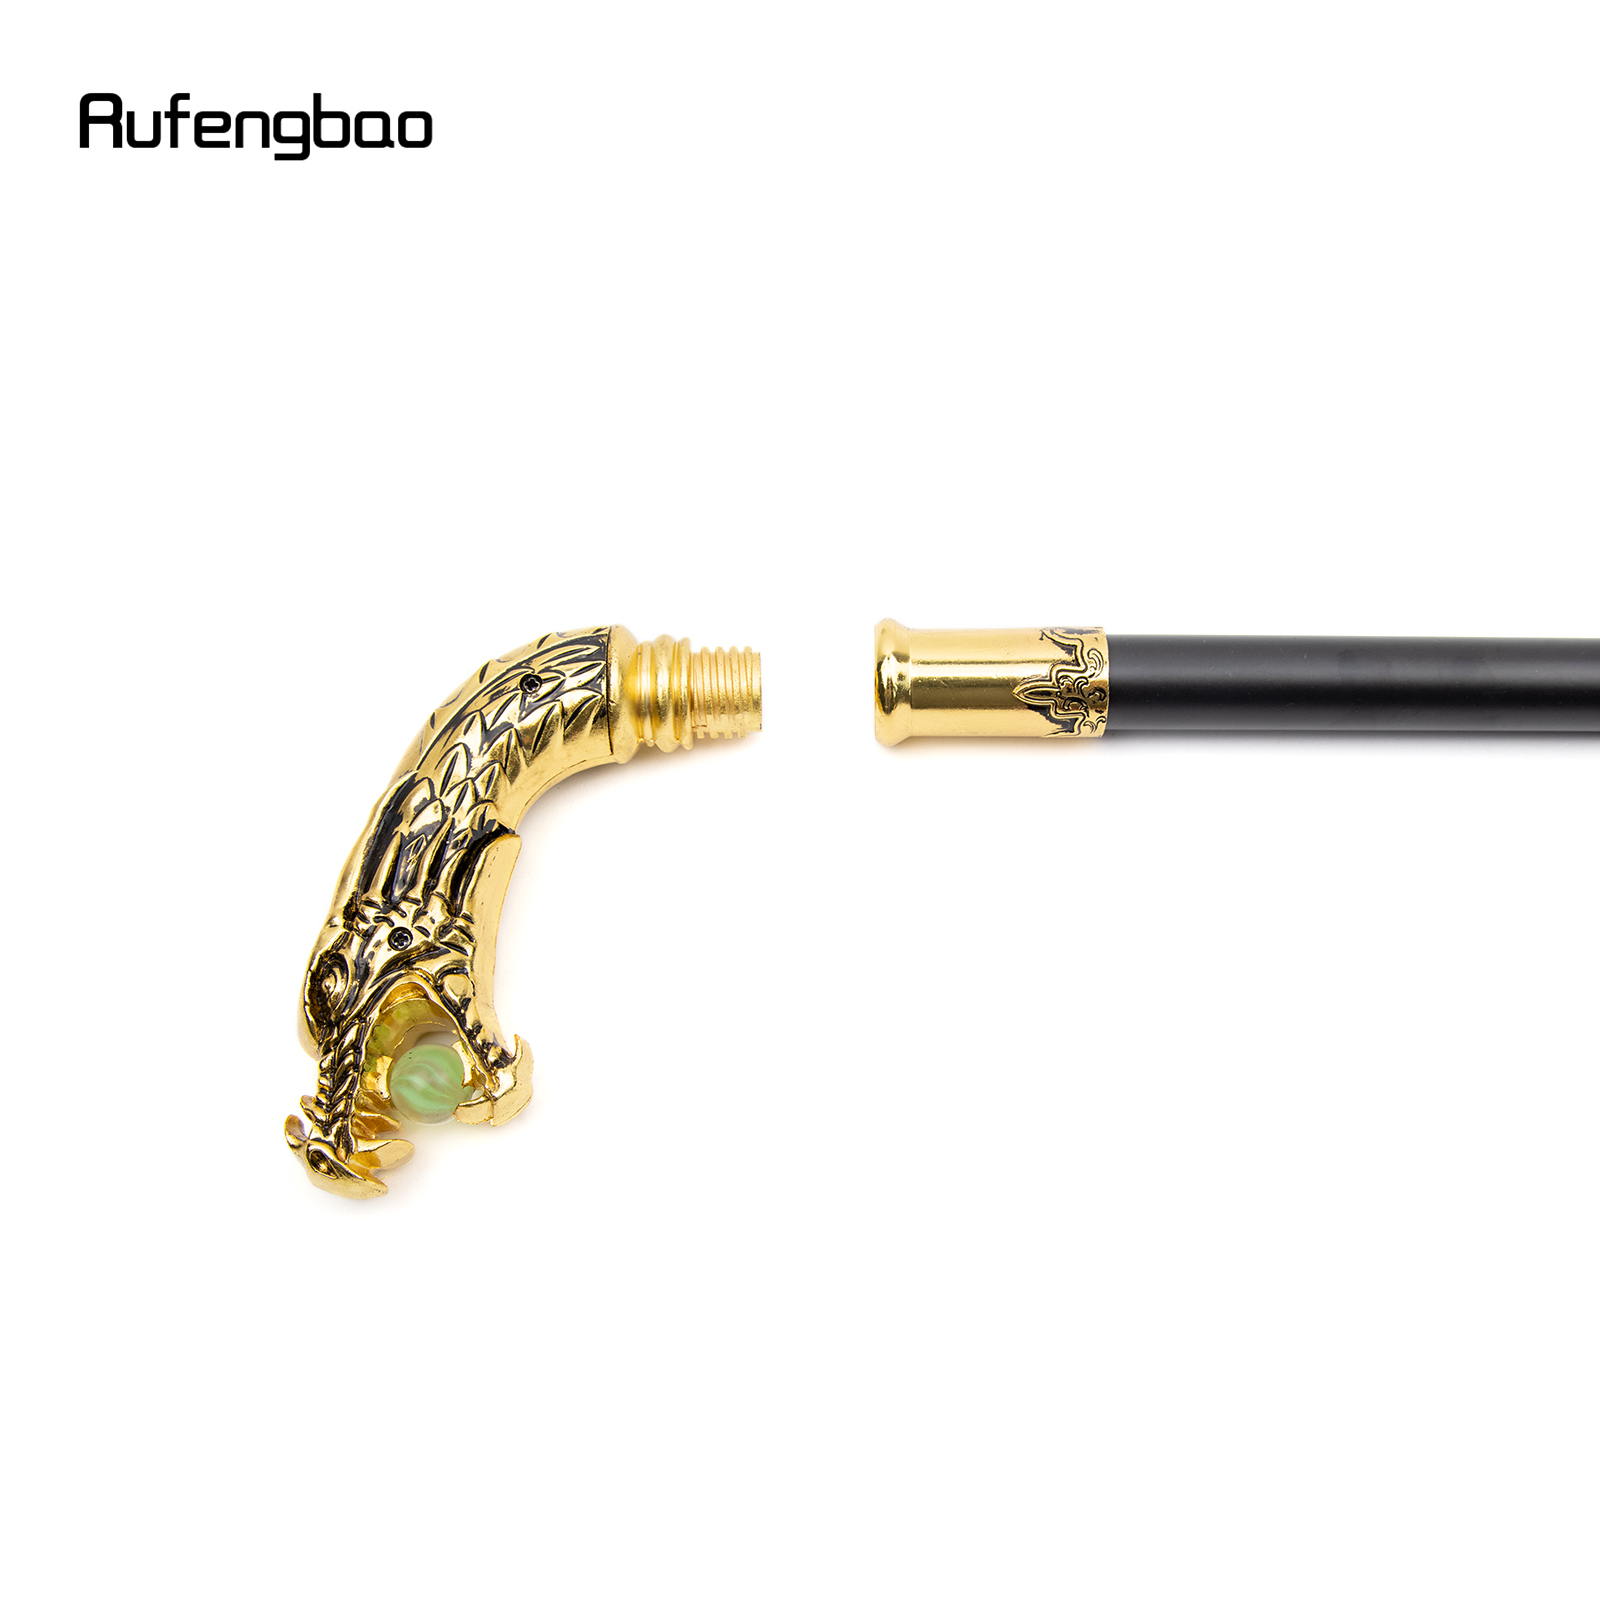 Gold Black Luxury Dragon Head Walking Cane Fashion Decorative Walking Stick